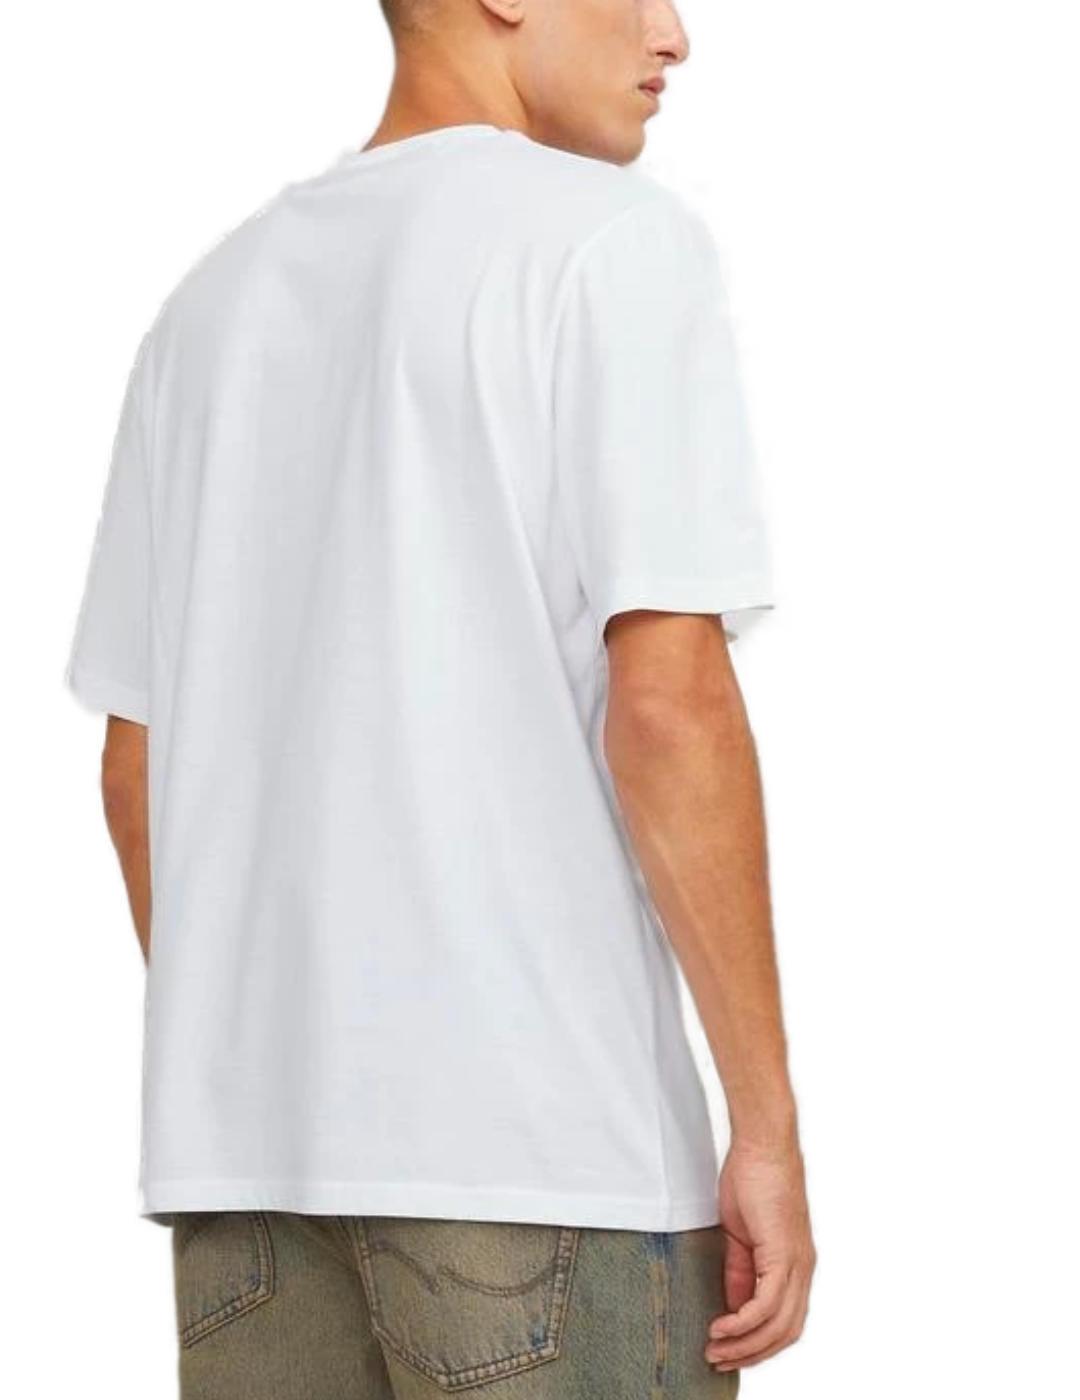 Camiseta Jack&Jones Heavens blanco manga corta para hombre